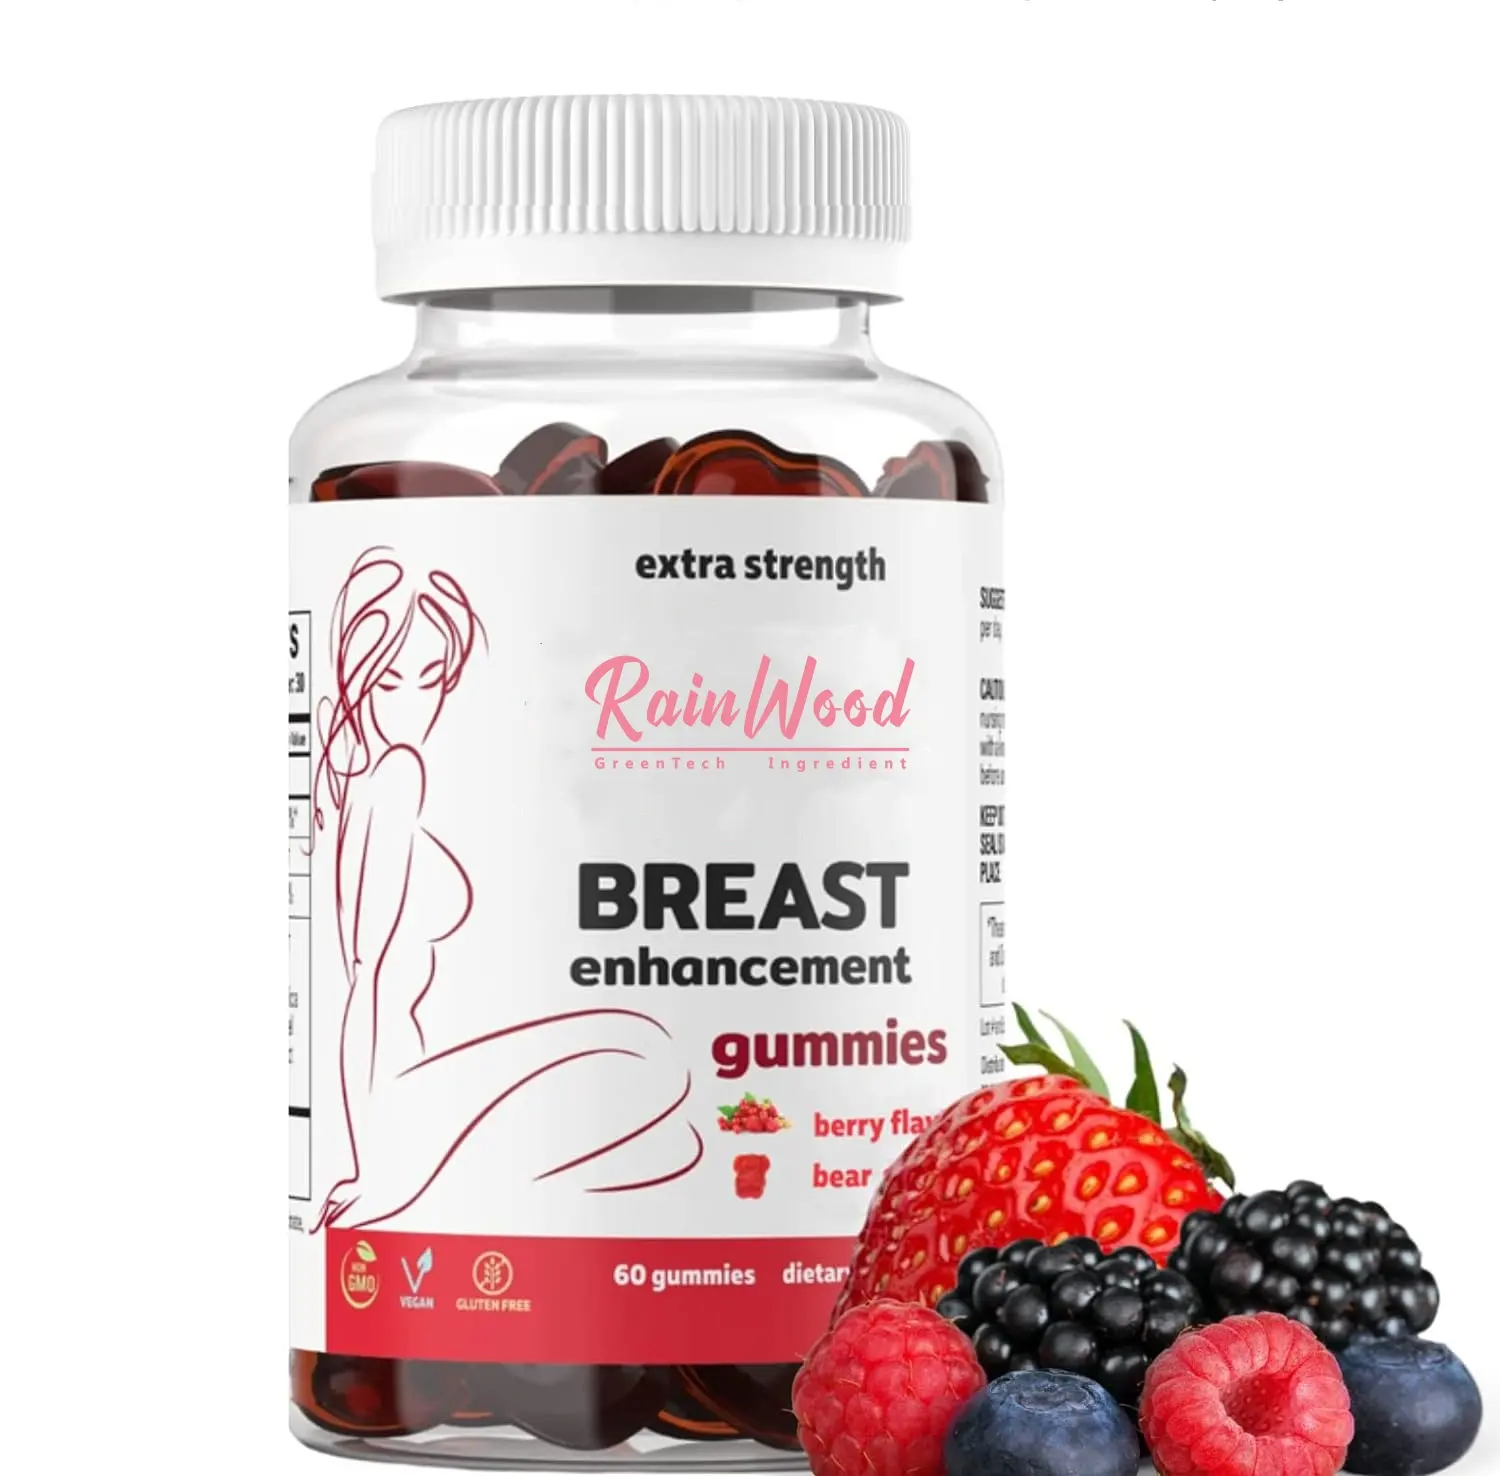 Rainwood Private Label Breast Enlargement Breast Enhancement Gummies